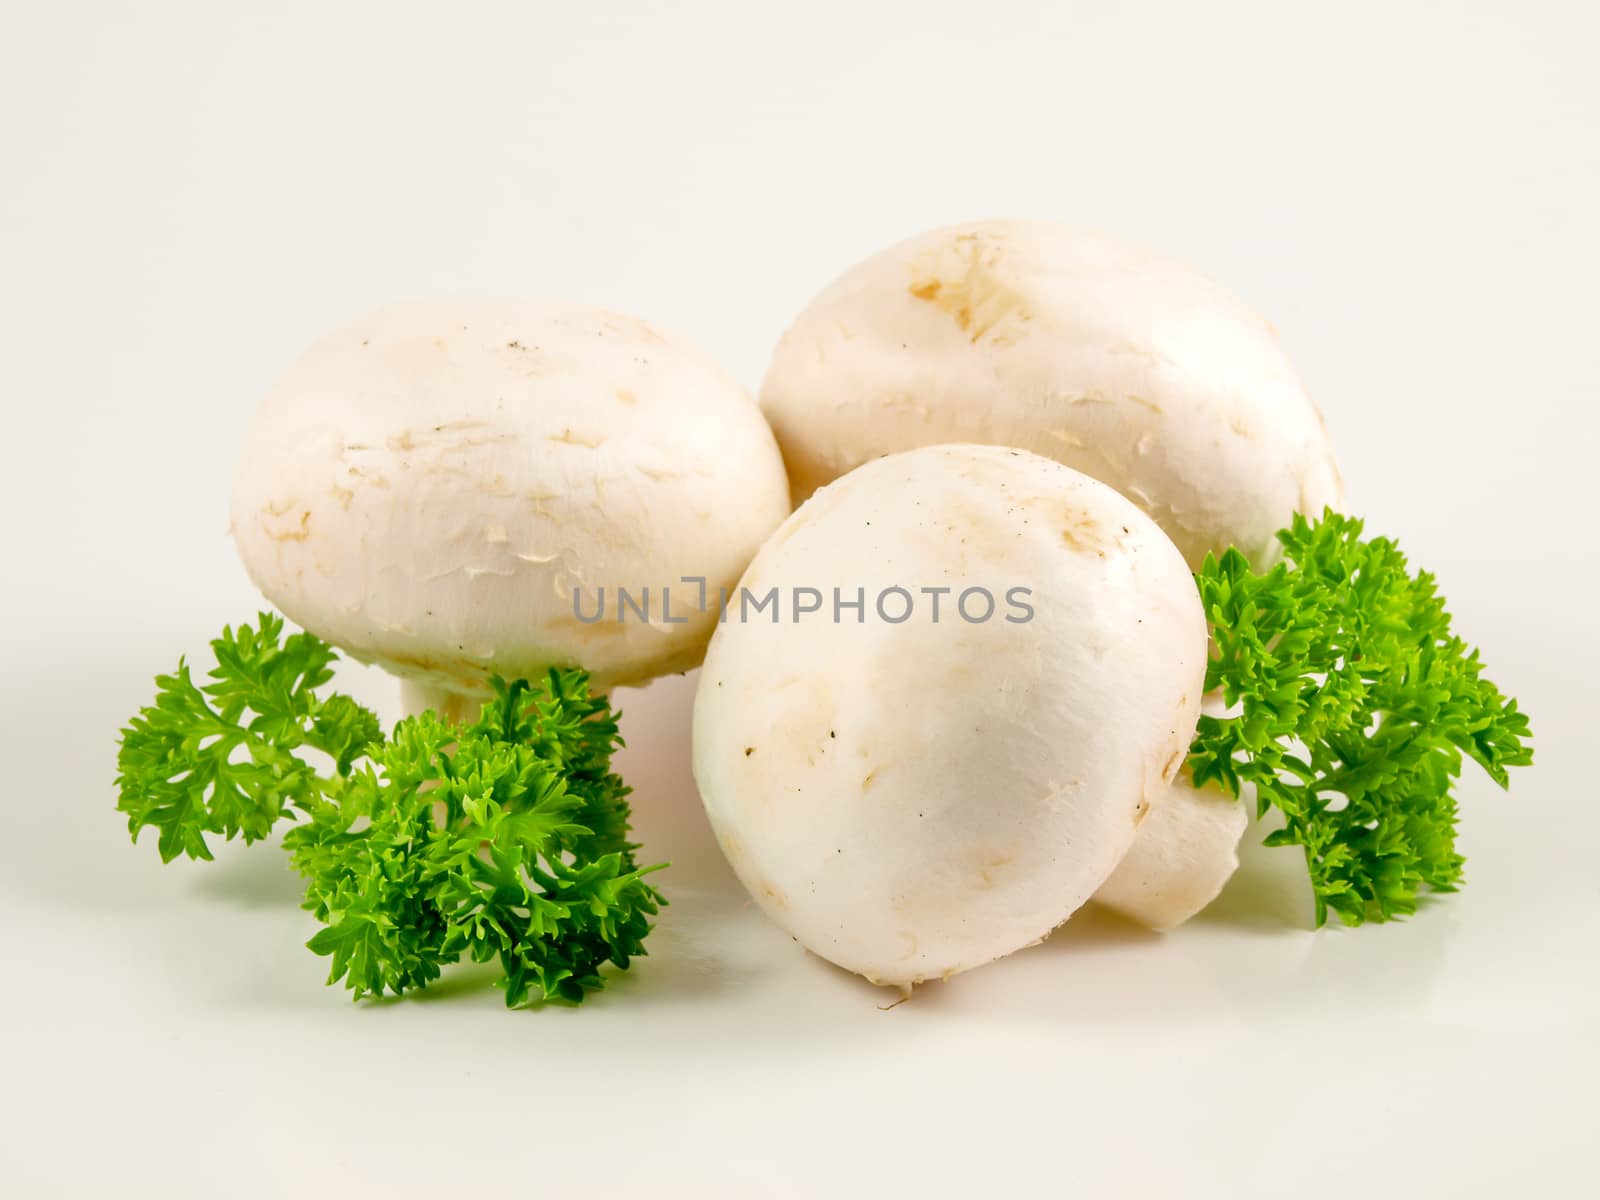 Champignon mushrooms and parsley by Arvebettum